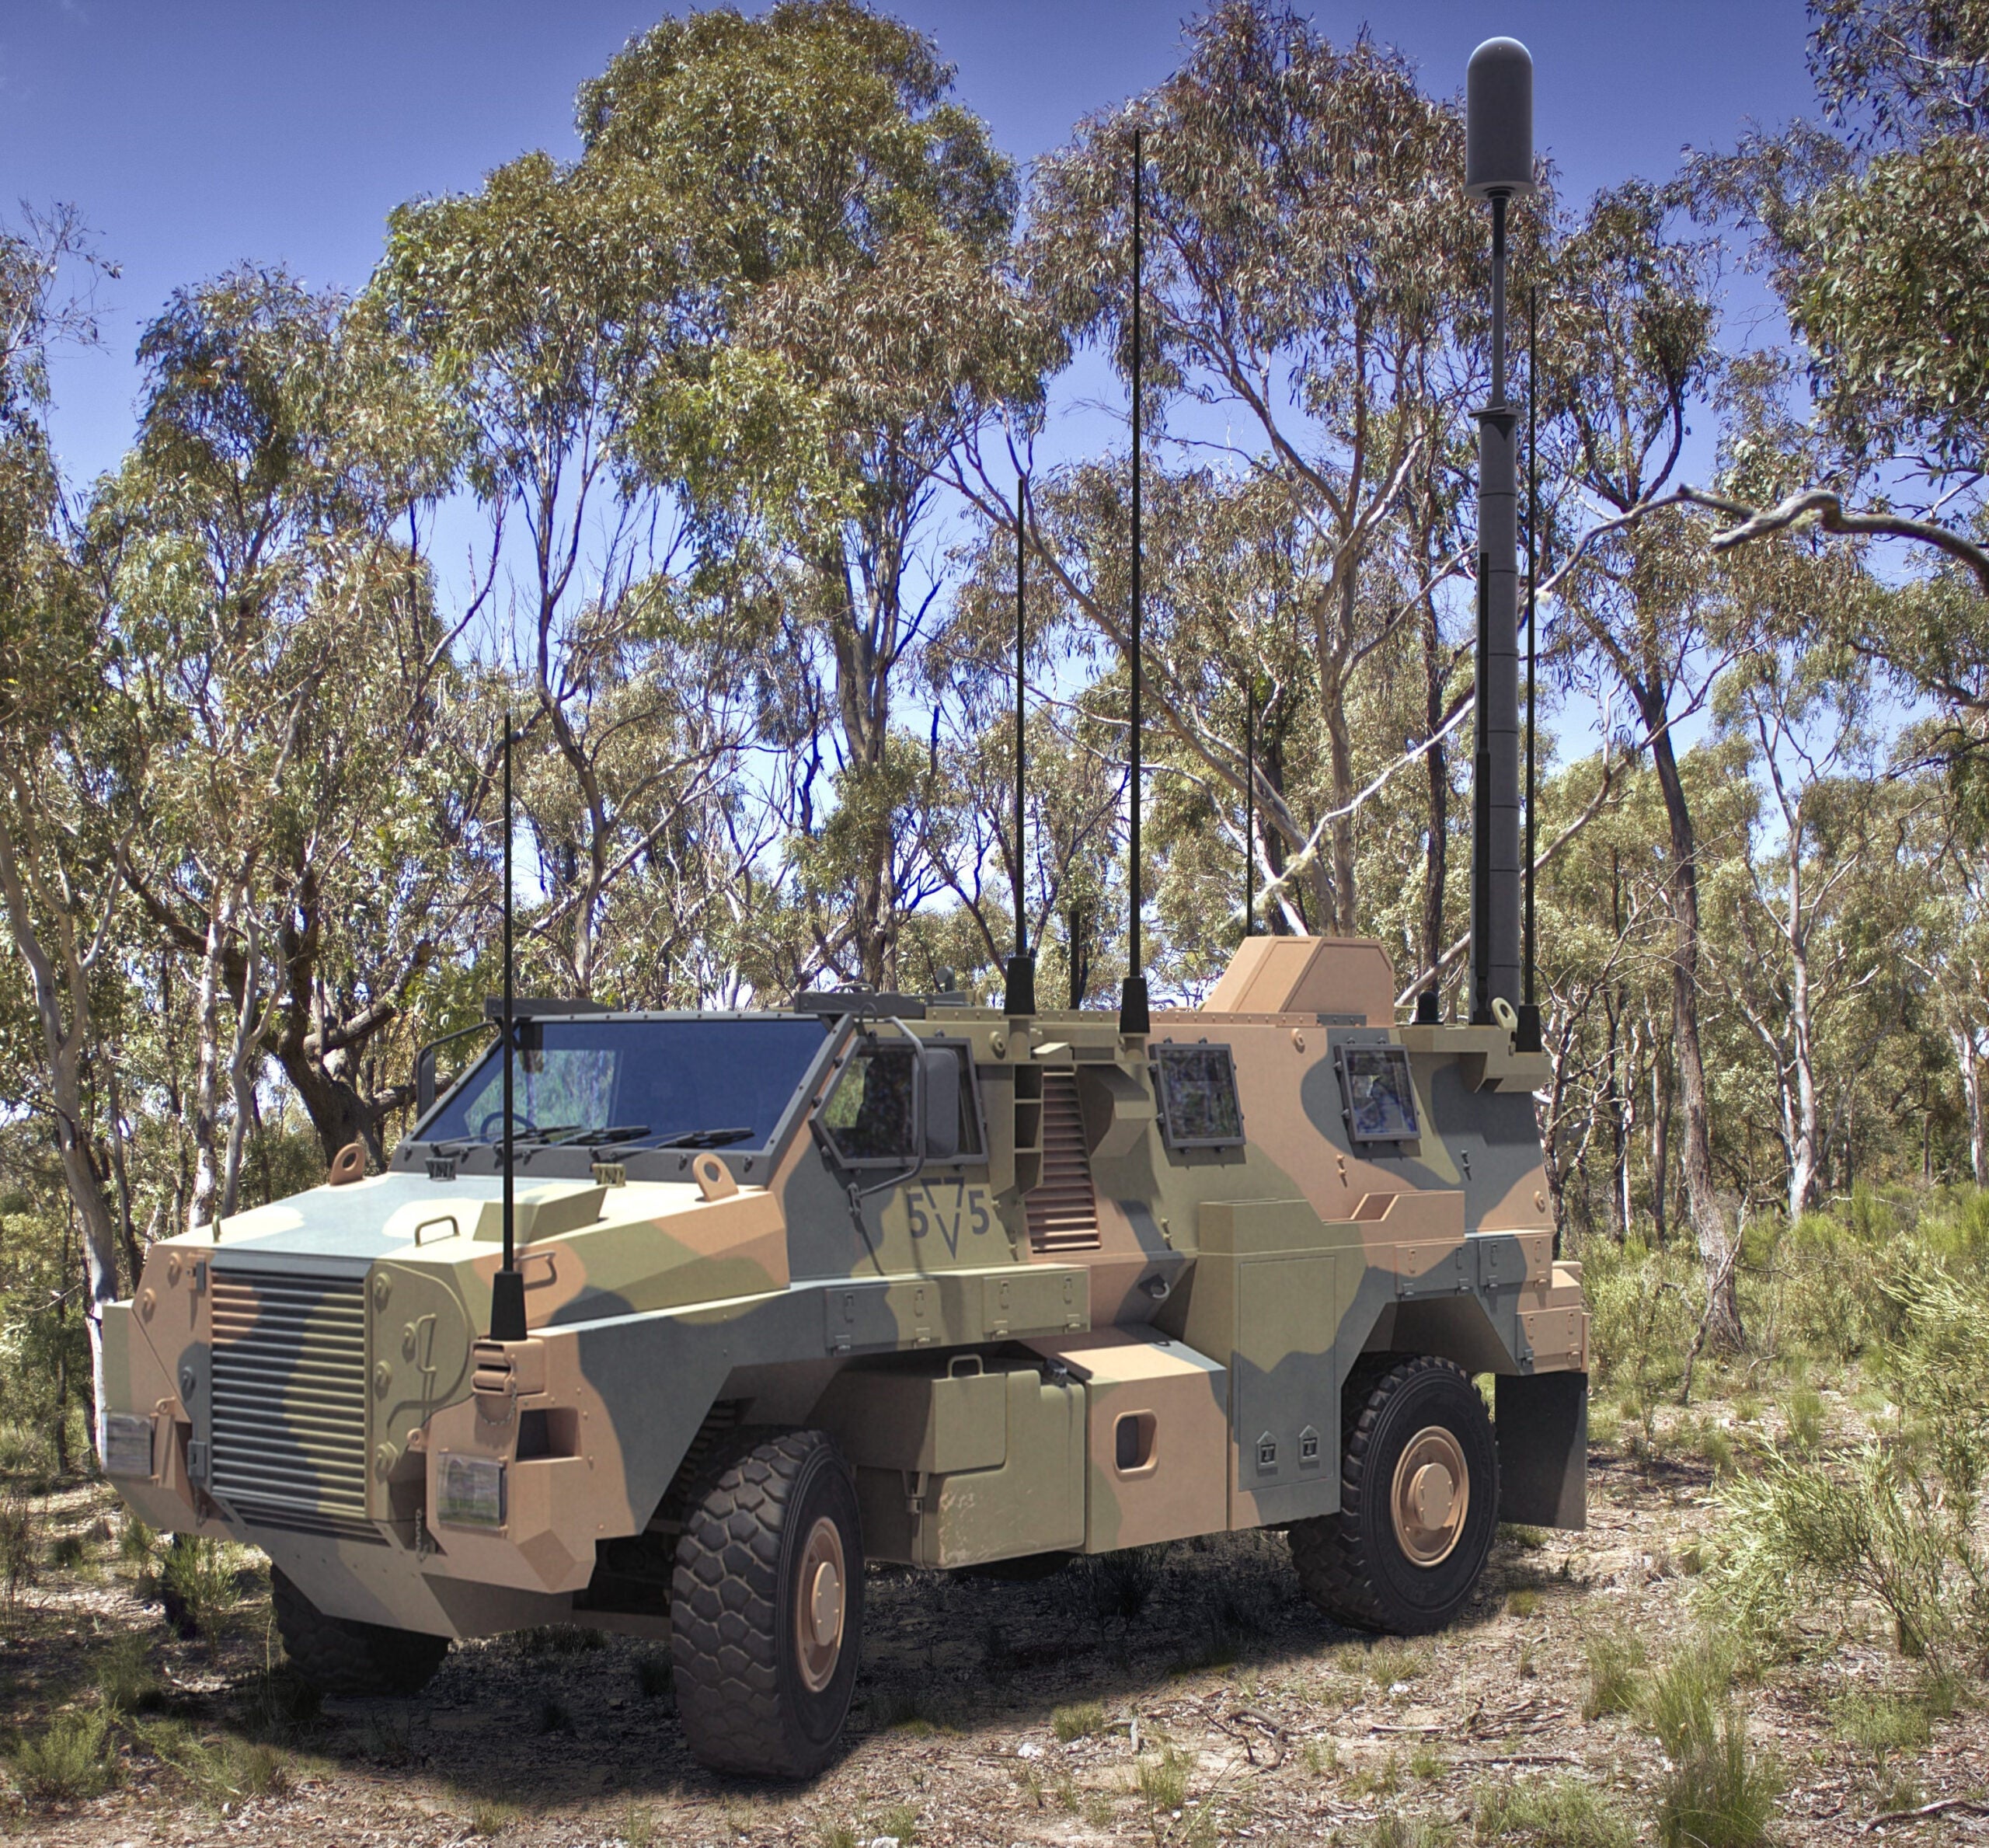 Pacific Defense to provide EW systems for Australia’s Bushmaster vehicles